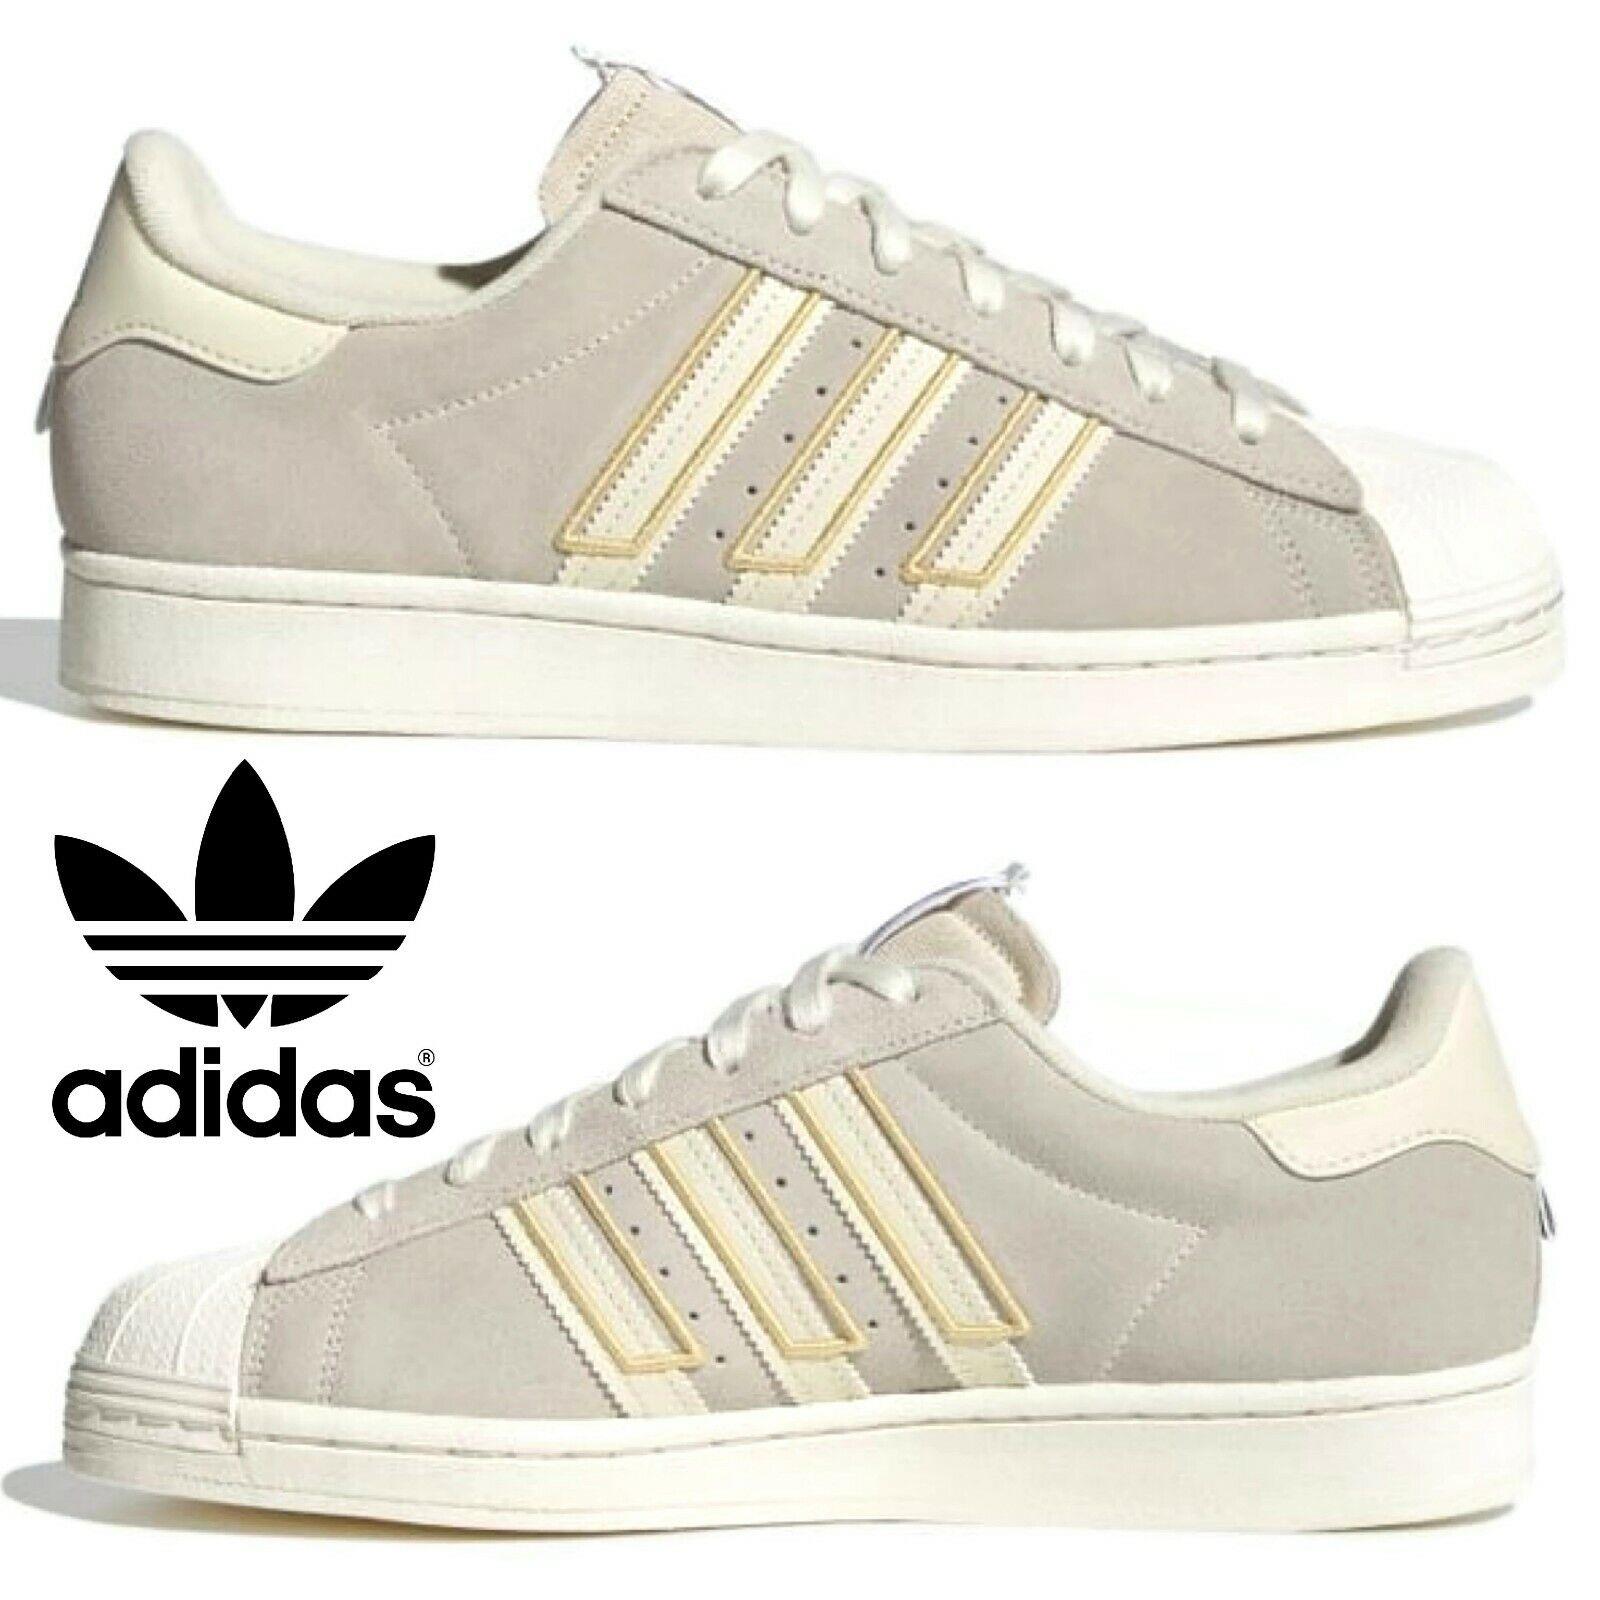 Adidas Originals Superstar Men`s Sneakers Comfort Sport Casual Shoes Off White - Beige , Off White / Wonder White / Pulse Amber Manufacturer